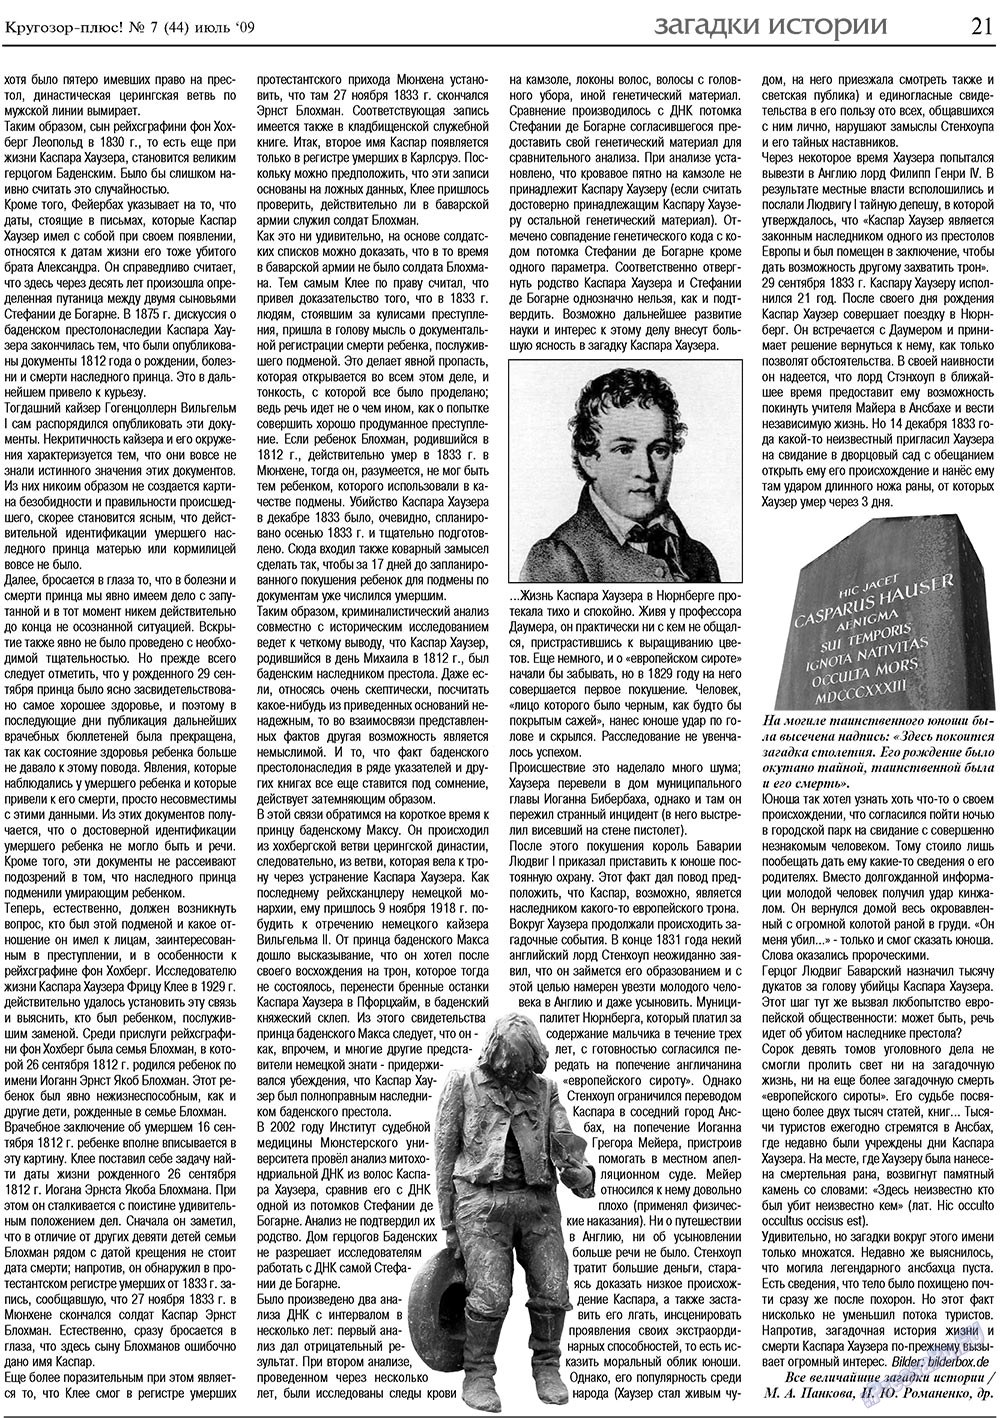 Кругозор плюс! (газета). 2009 год, номер 7, стр. 21